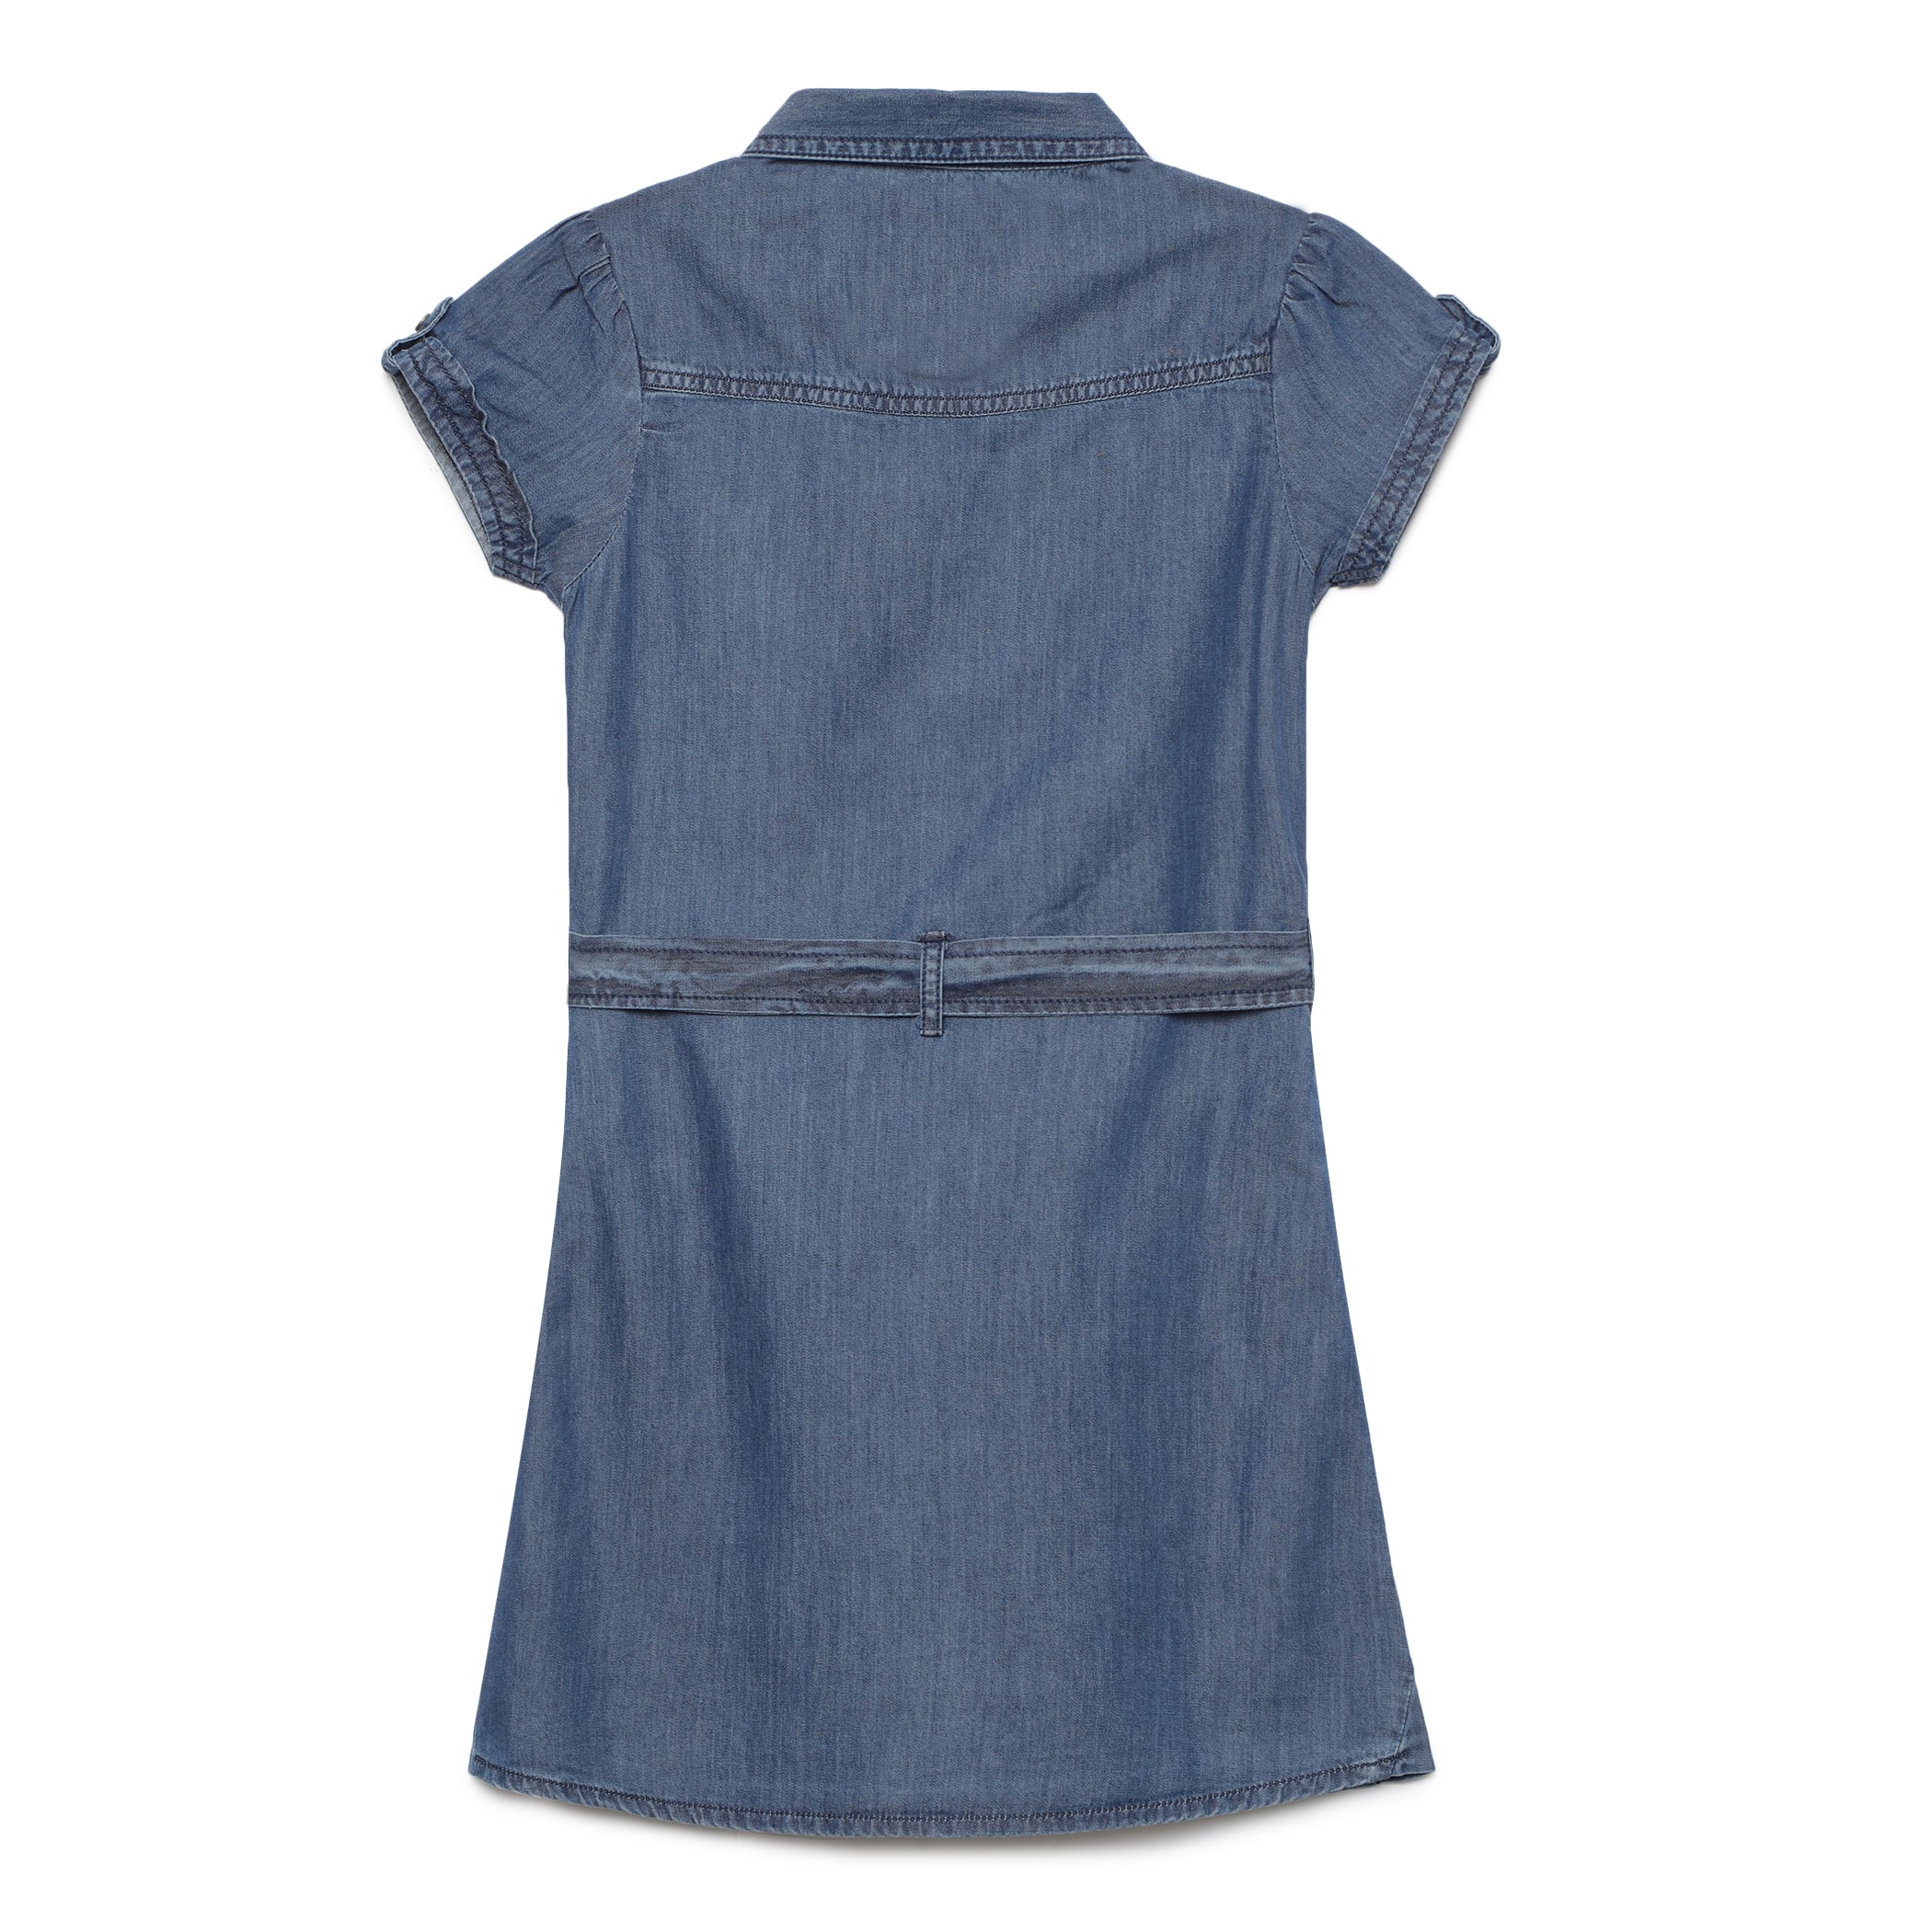 Buy Half Sleeve Denim Dress Kurti with Side Pockets 1369 (Medium) Navy Blue  at Amazon.in